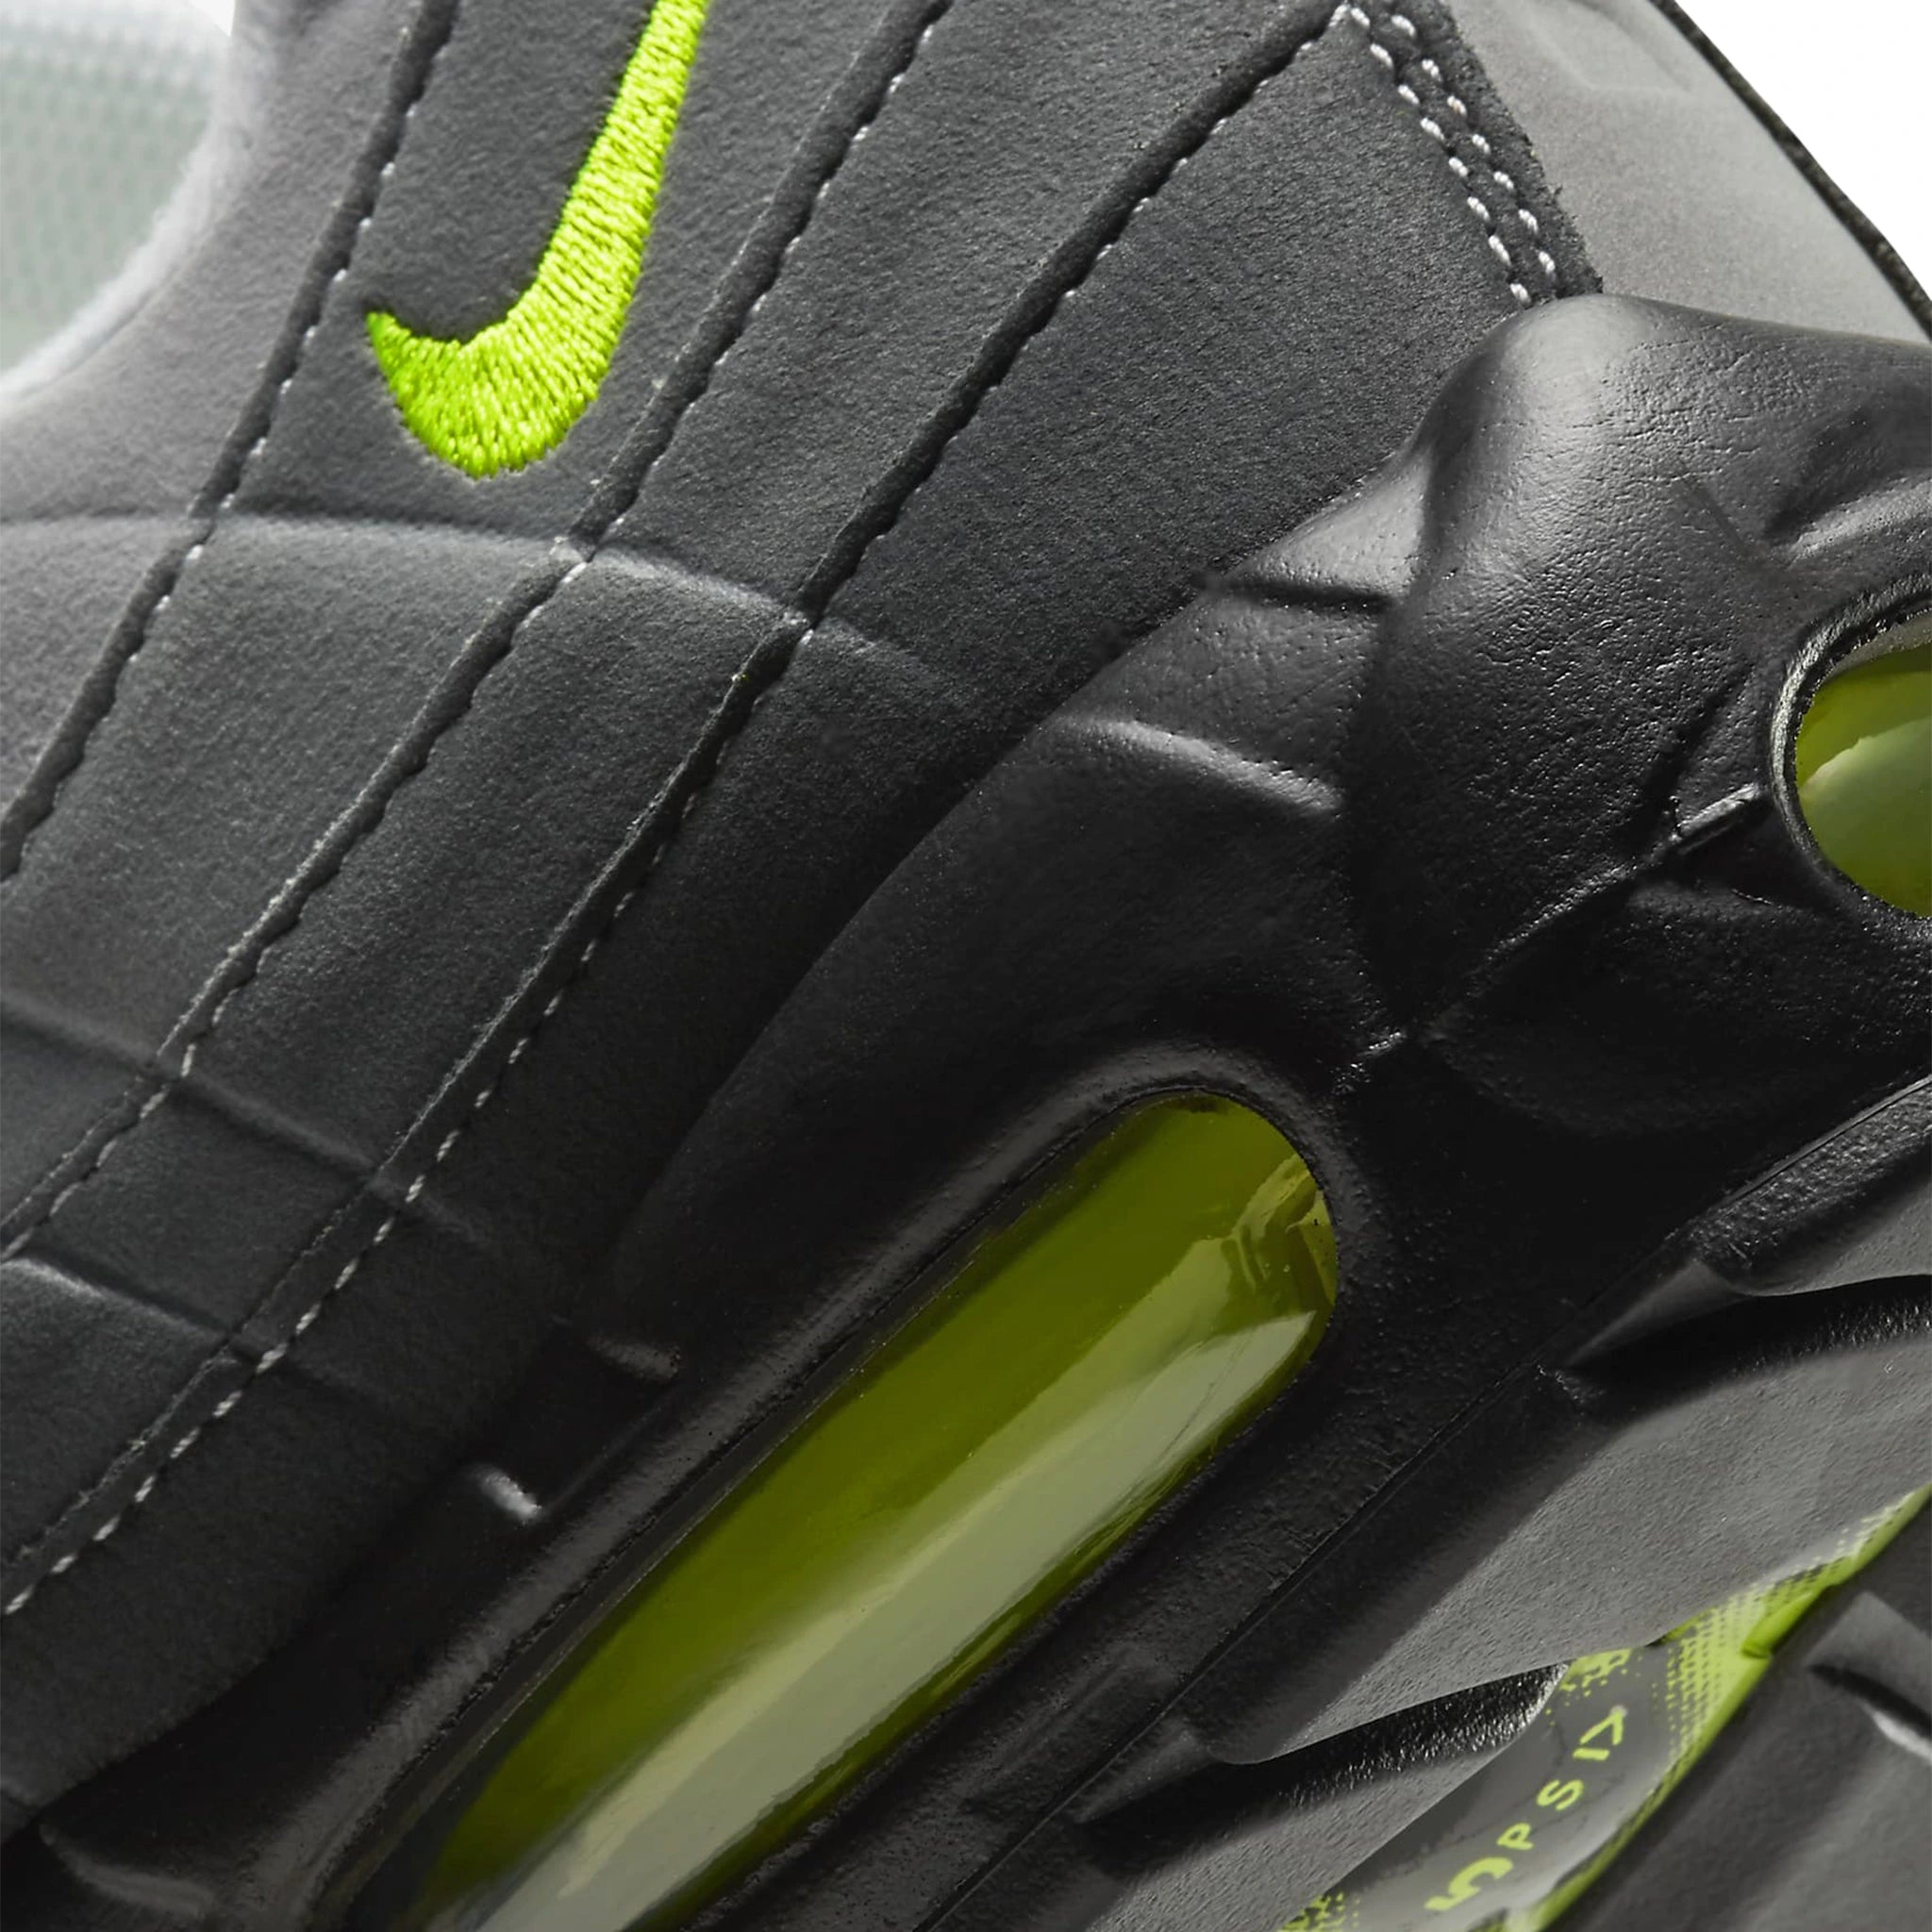 Heel view of Nike Air Max 95 OG Neon CT1689-001